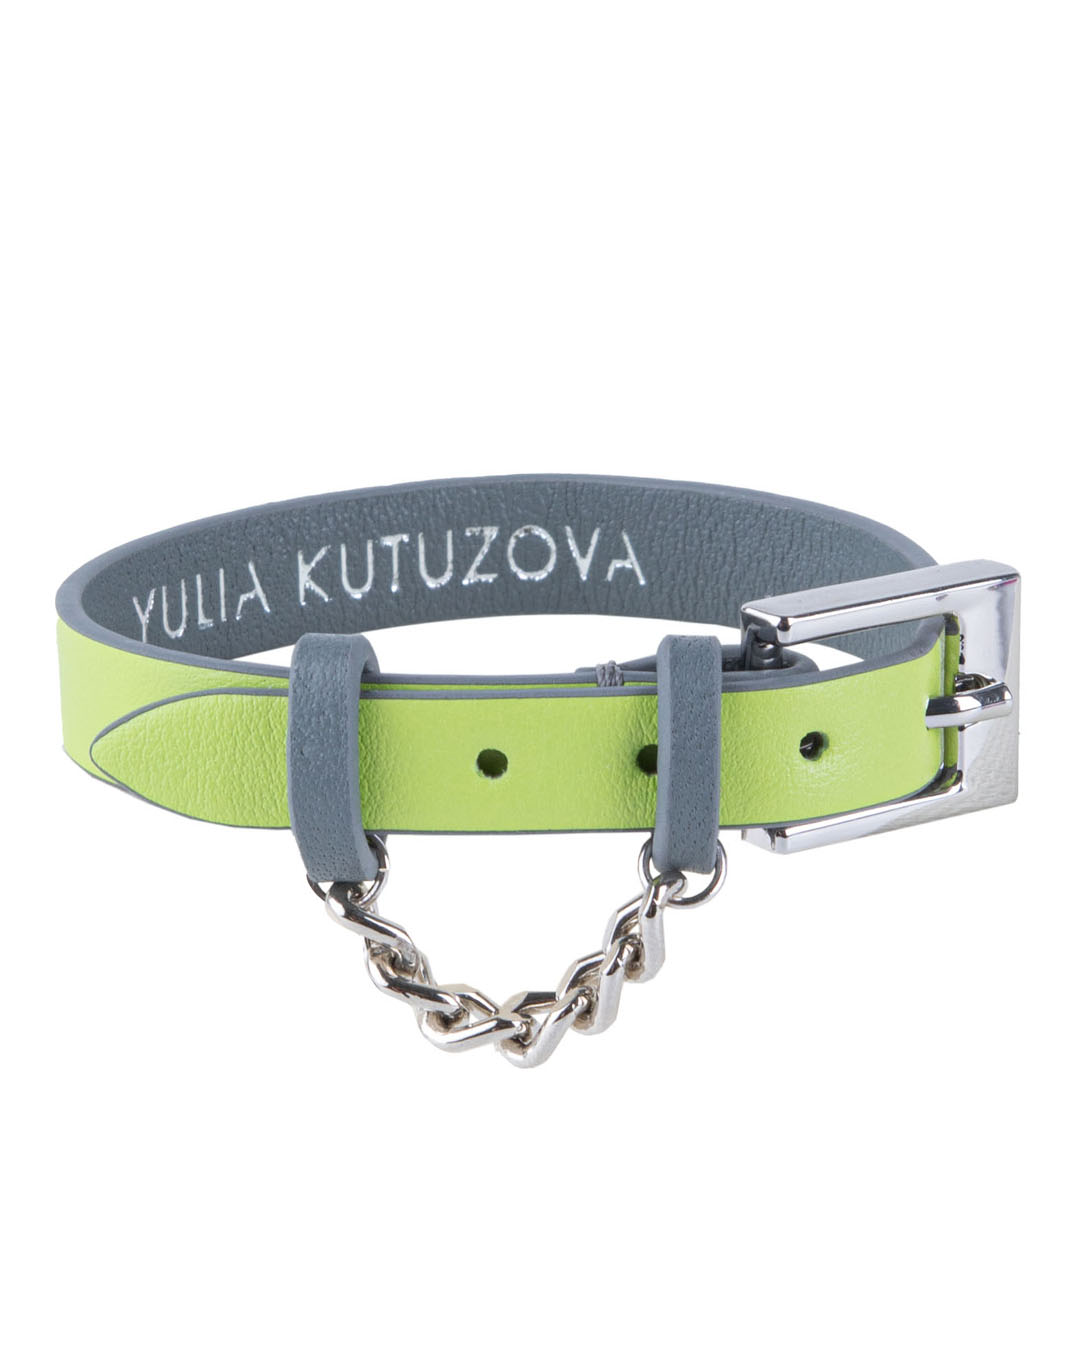 YULIA KUTUZOVA CHAIN артикул BR01-13 марки YULIA KUTUZOVA купить за 3200 руб.